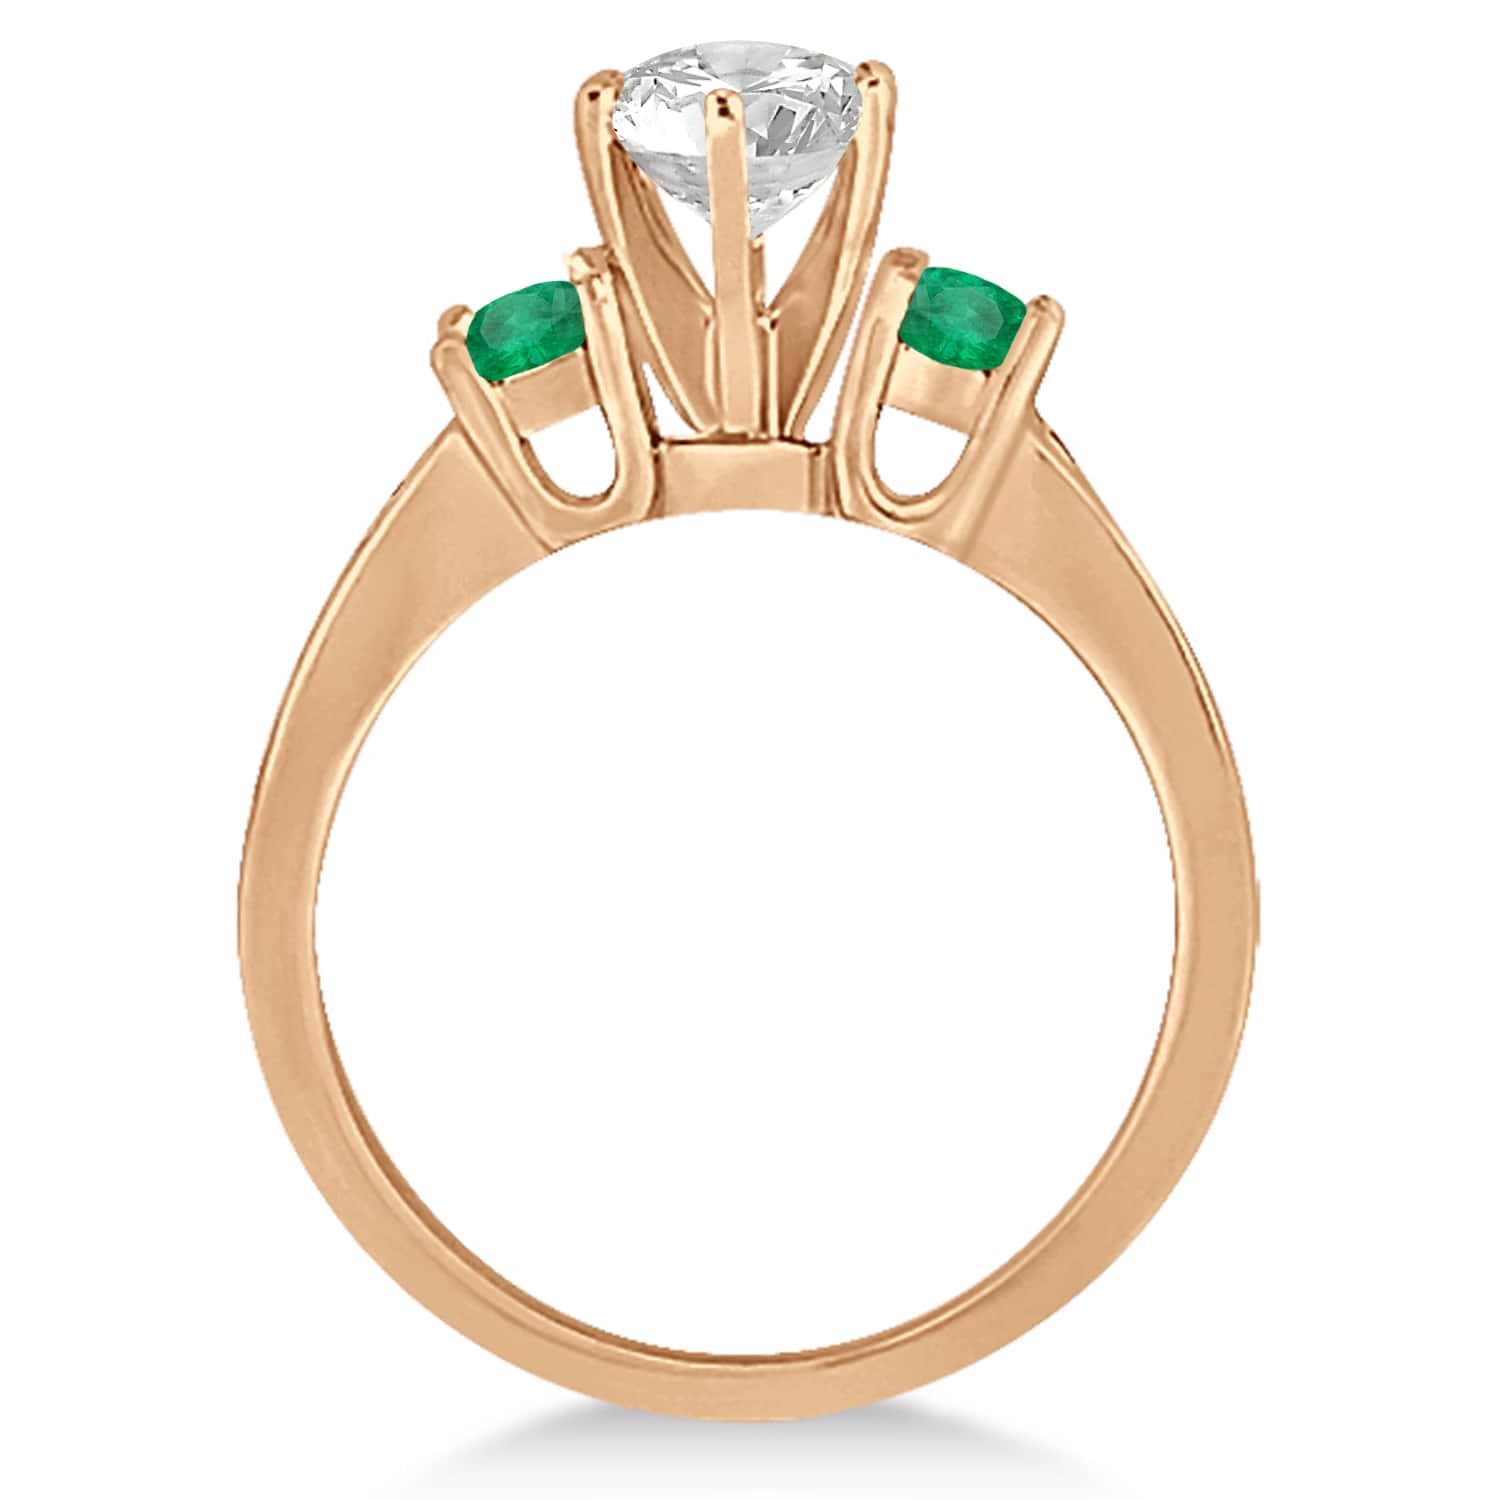 Three-Stone Emerald & Diamond Engagement Ring 14k Rose Gold (0.45ct)